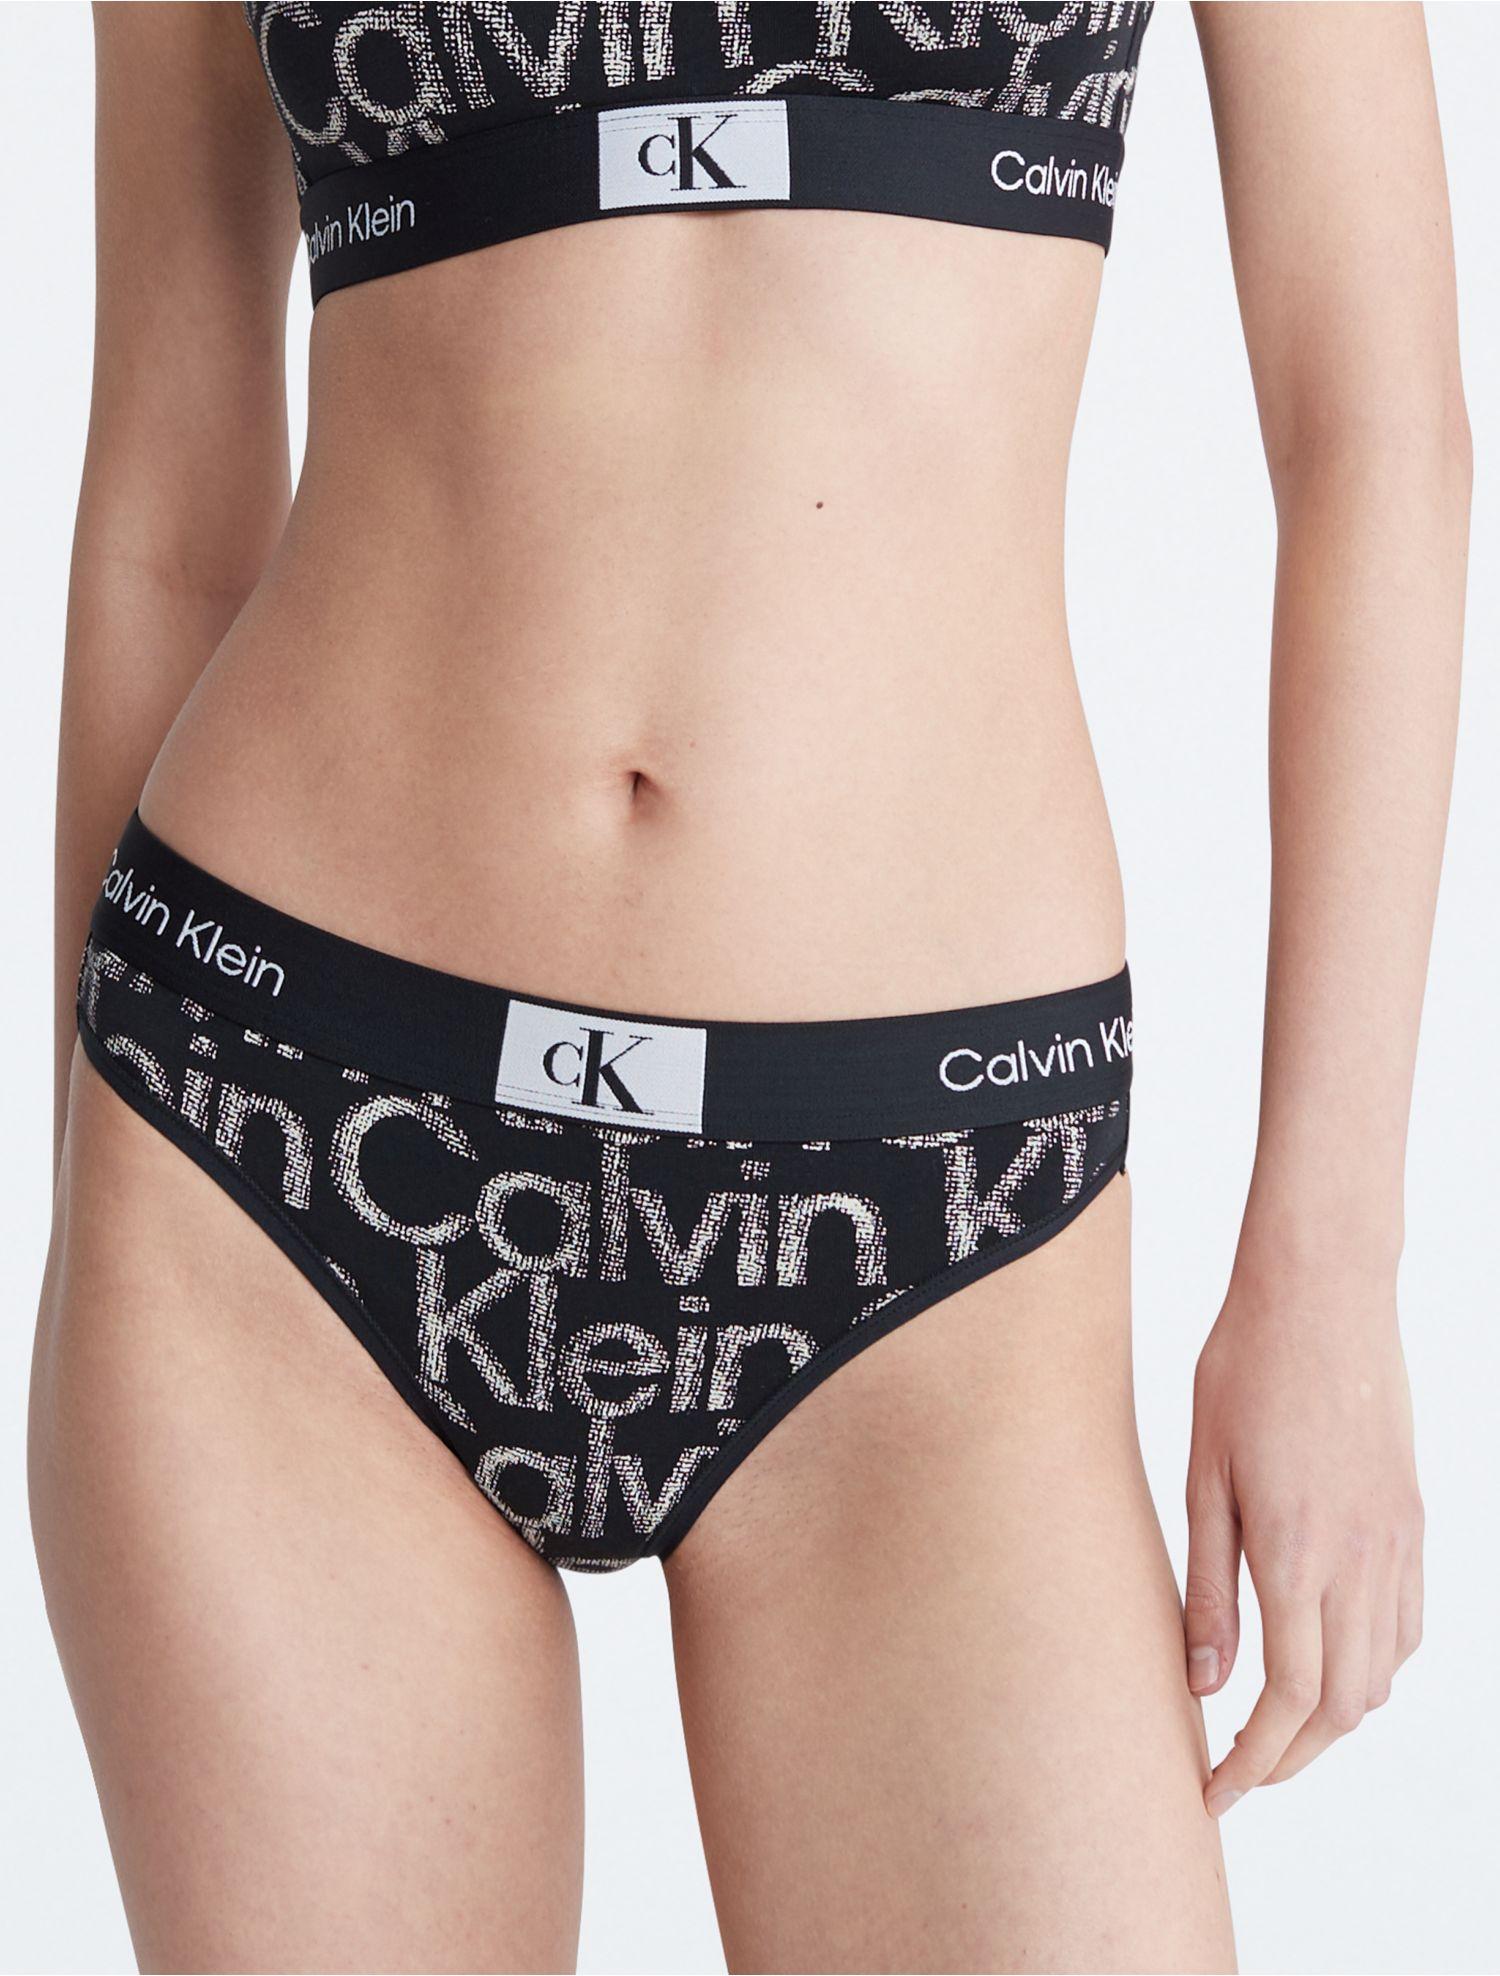 Calvin Klein 1996 Cotton Stretch Modern Bikini in Black